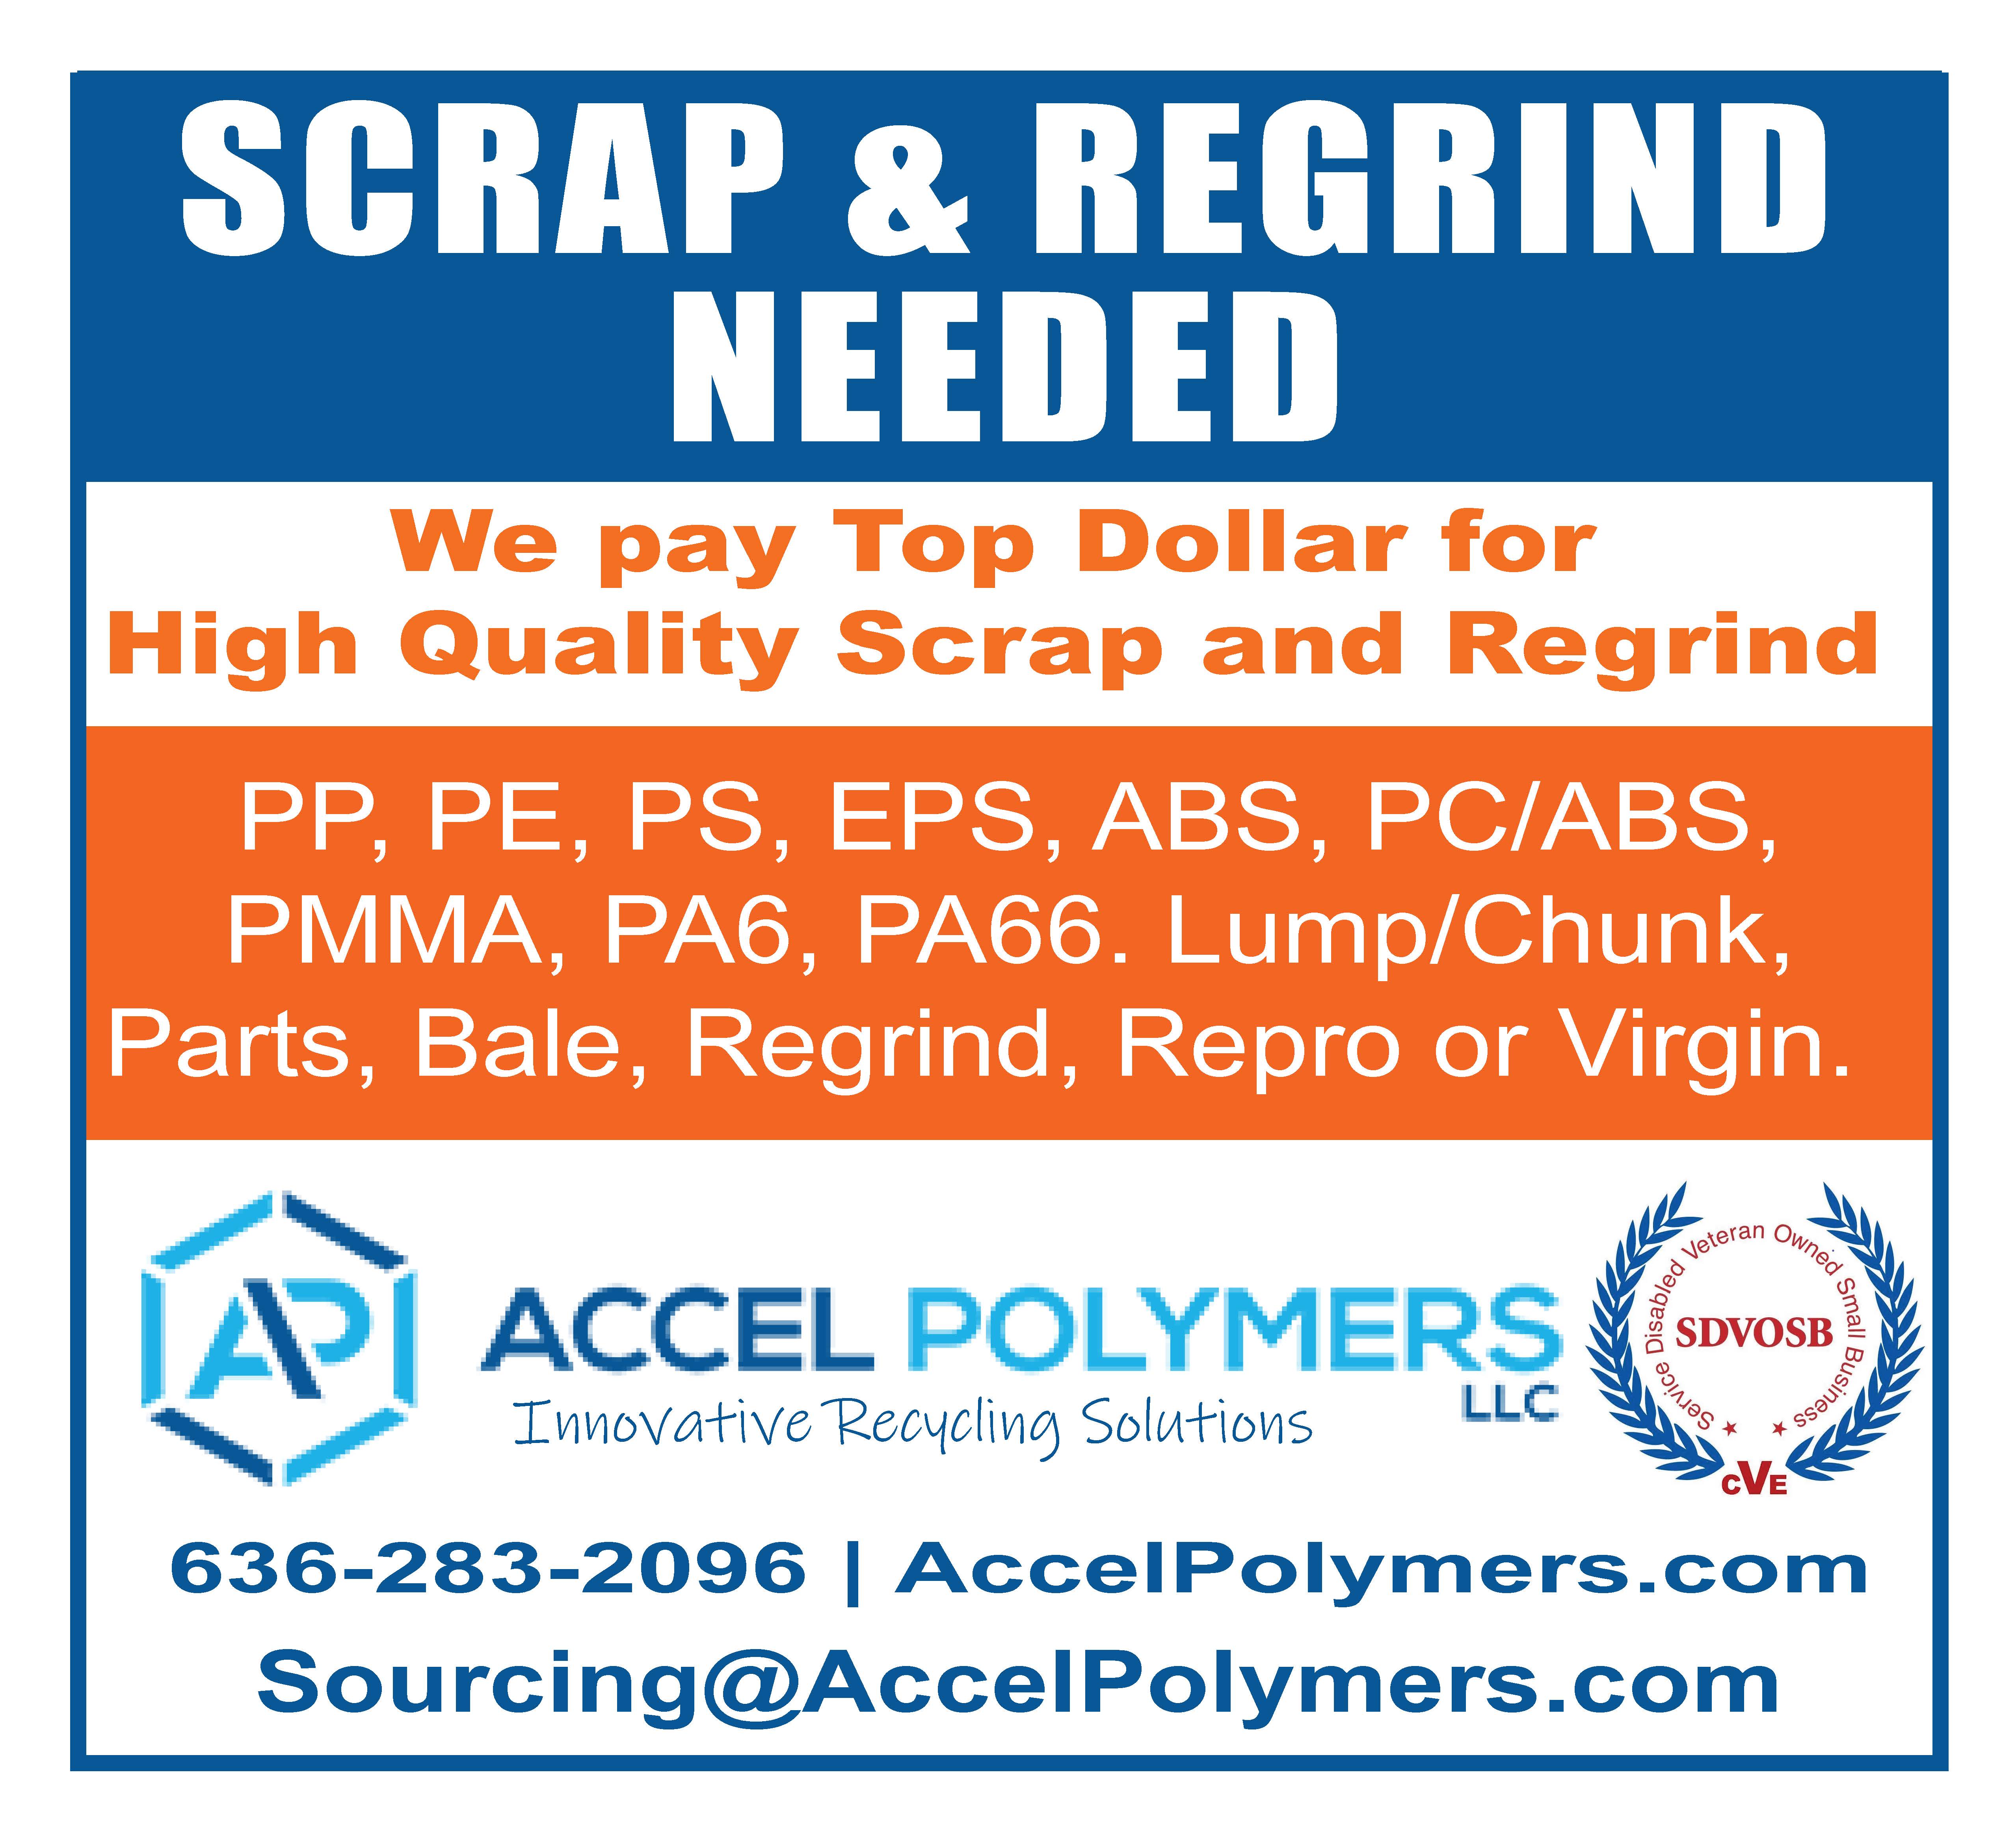 Accel Polymers - Scrap & Regrind Needed